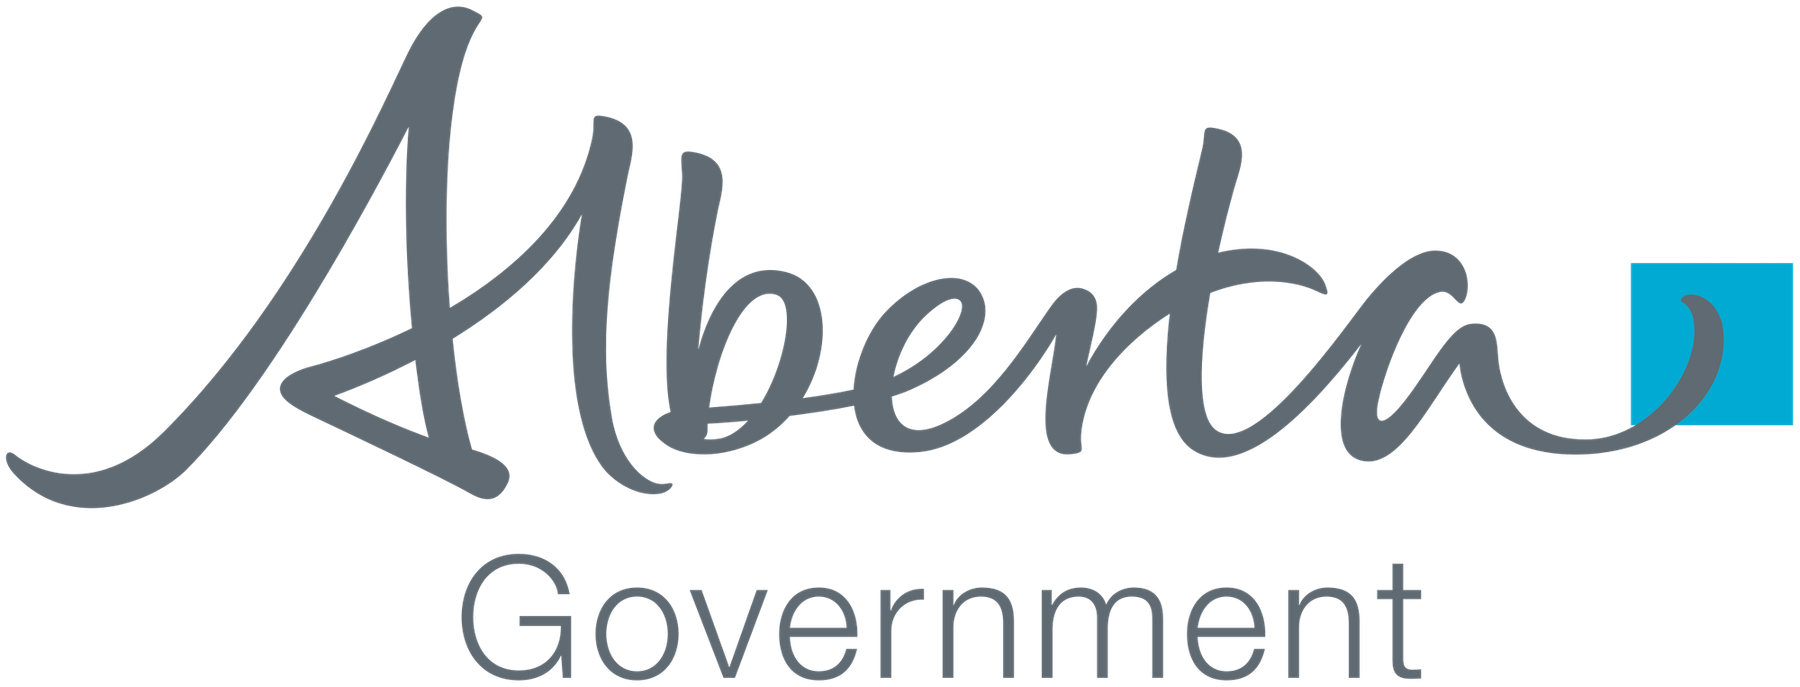 Alberta Government logo on a transparent background